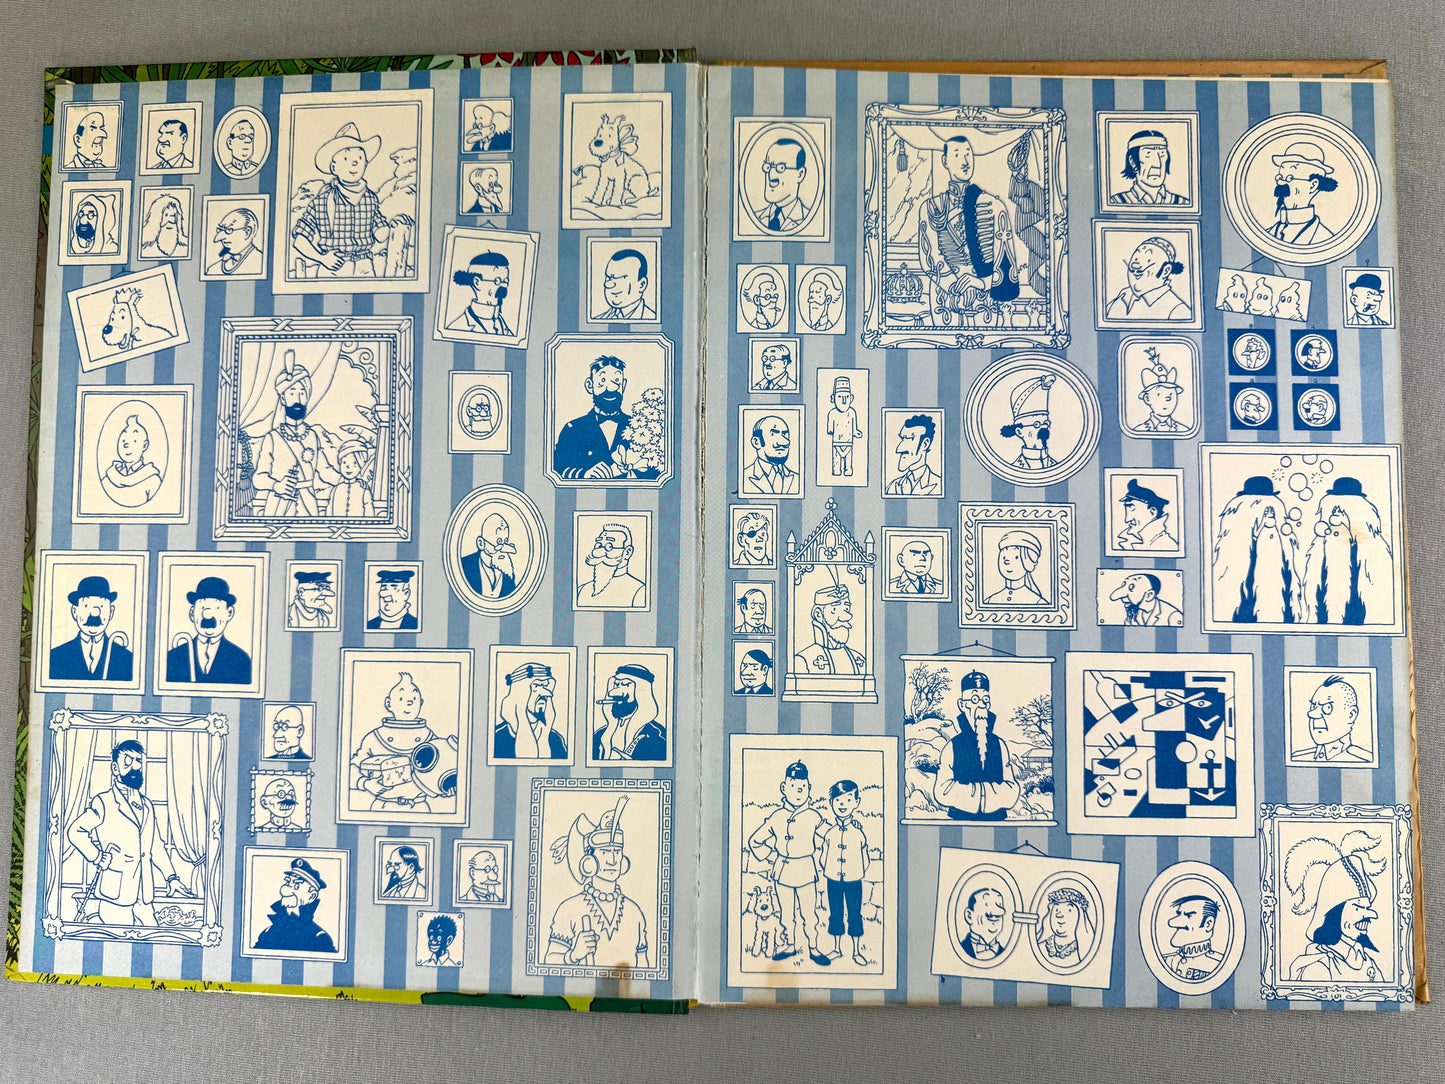 Tintin et les Picaros - Casterman 1976 1st Belgian Edition Hardback Rare book Herge EO